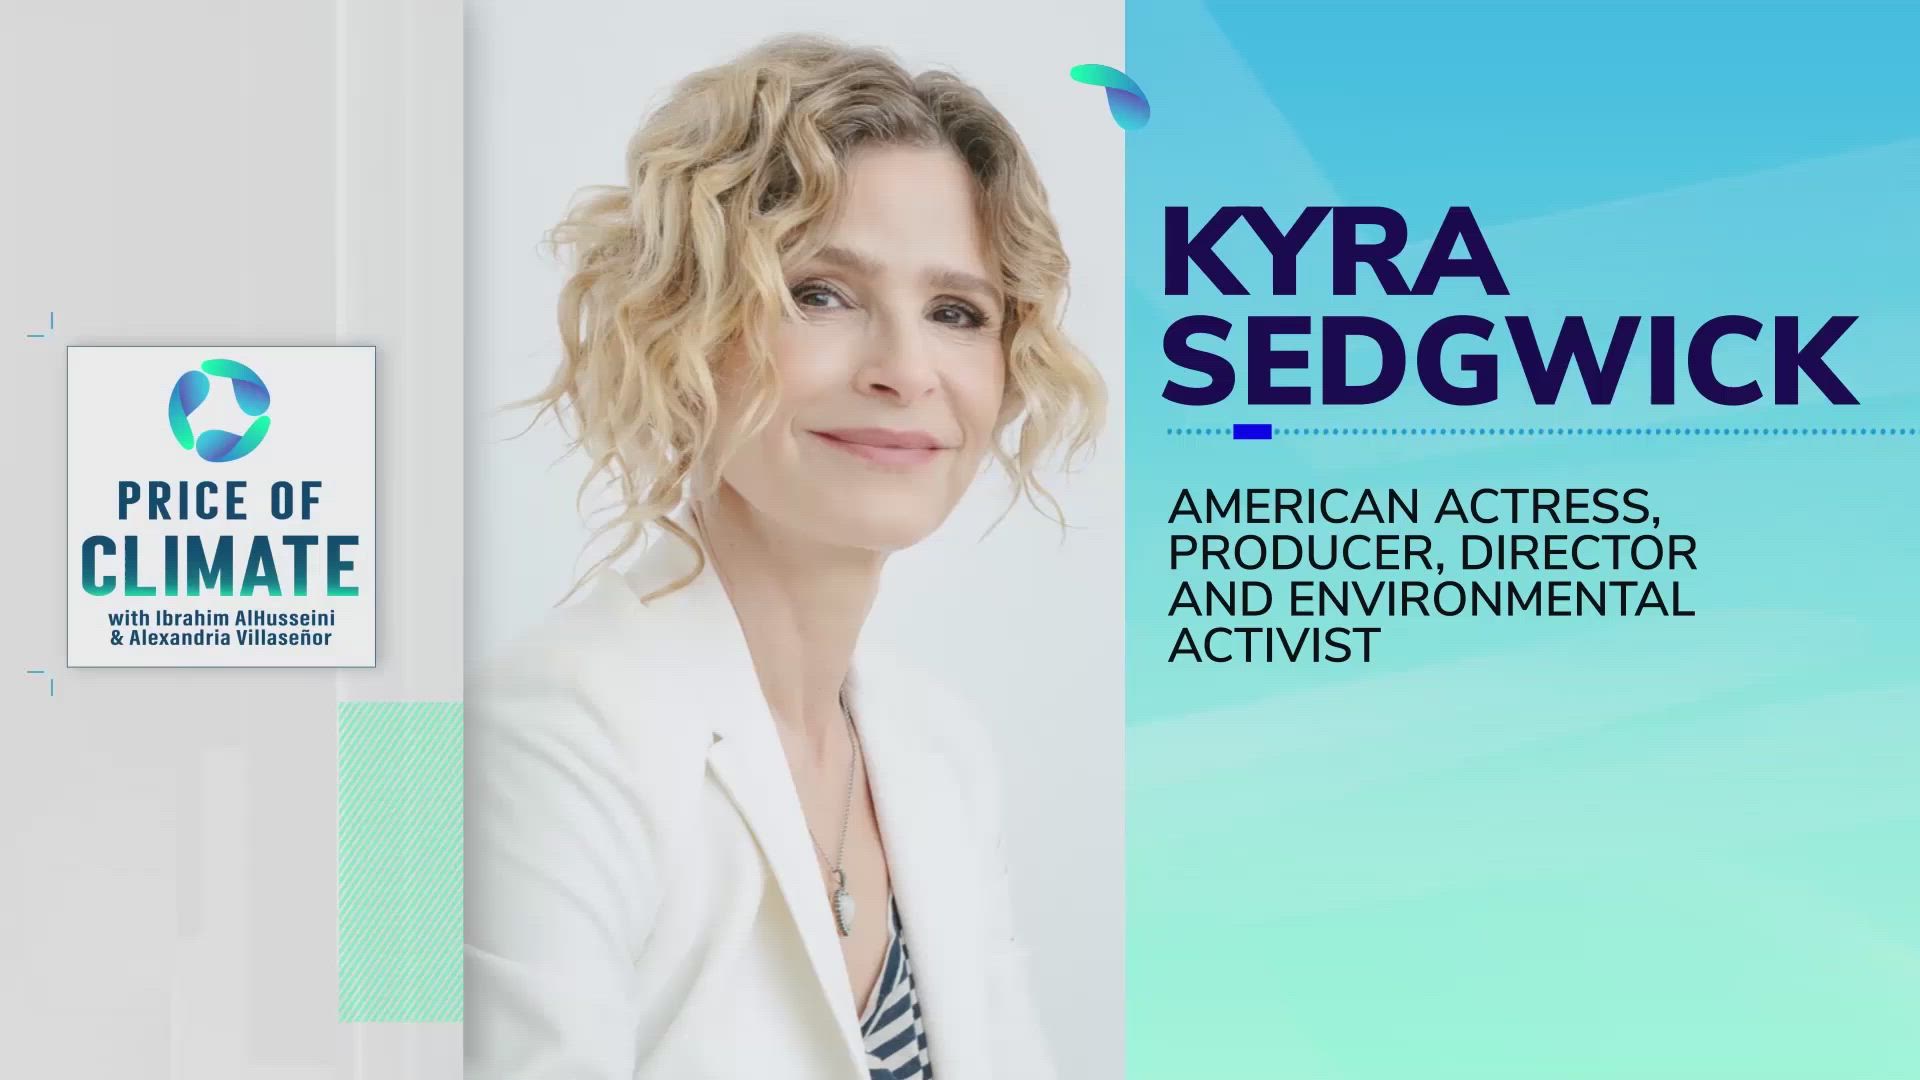 Kyra sedgwick american actress producer director environmental activist